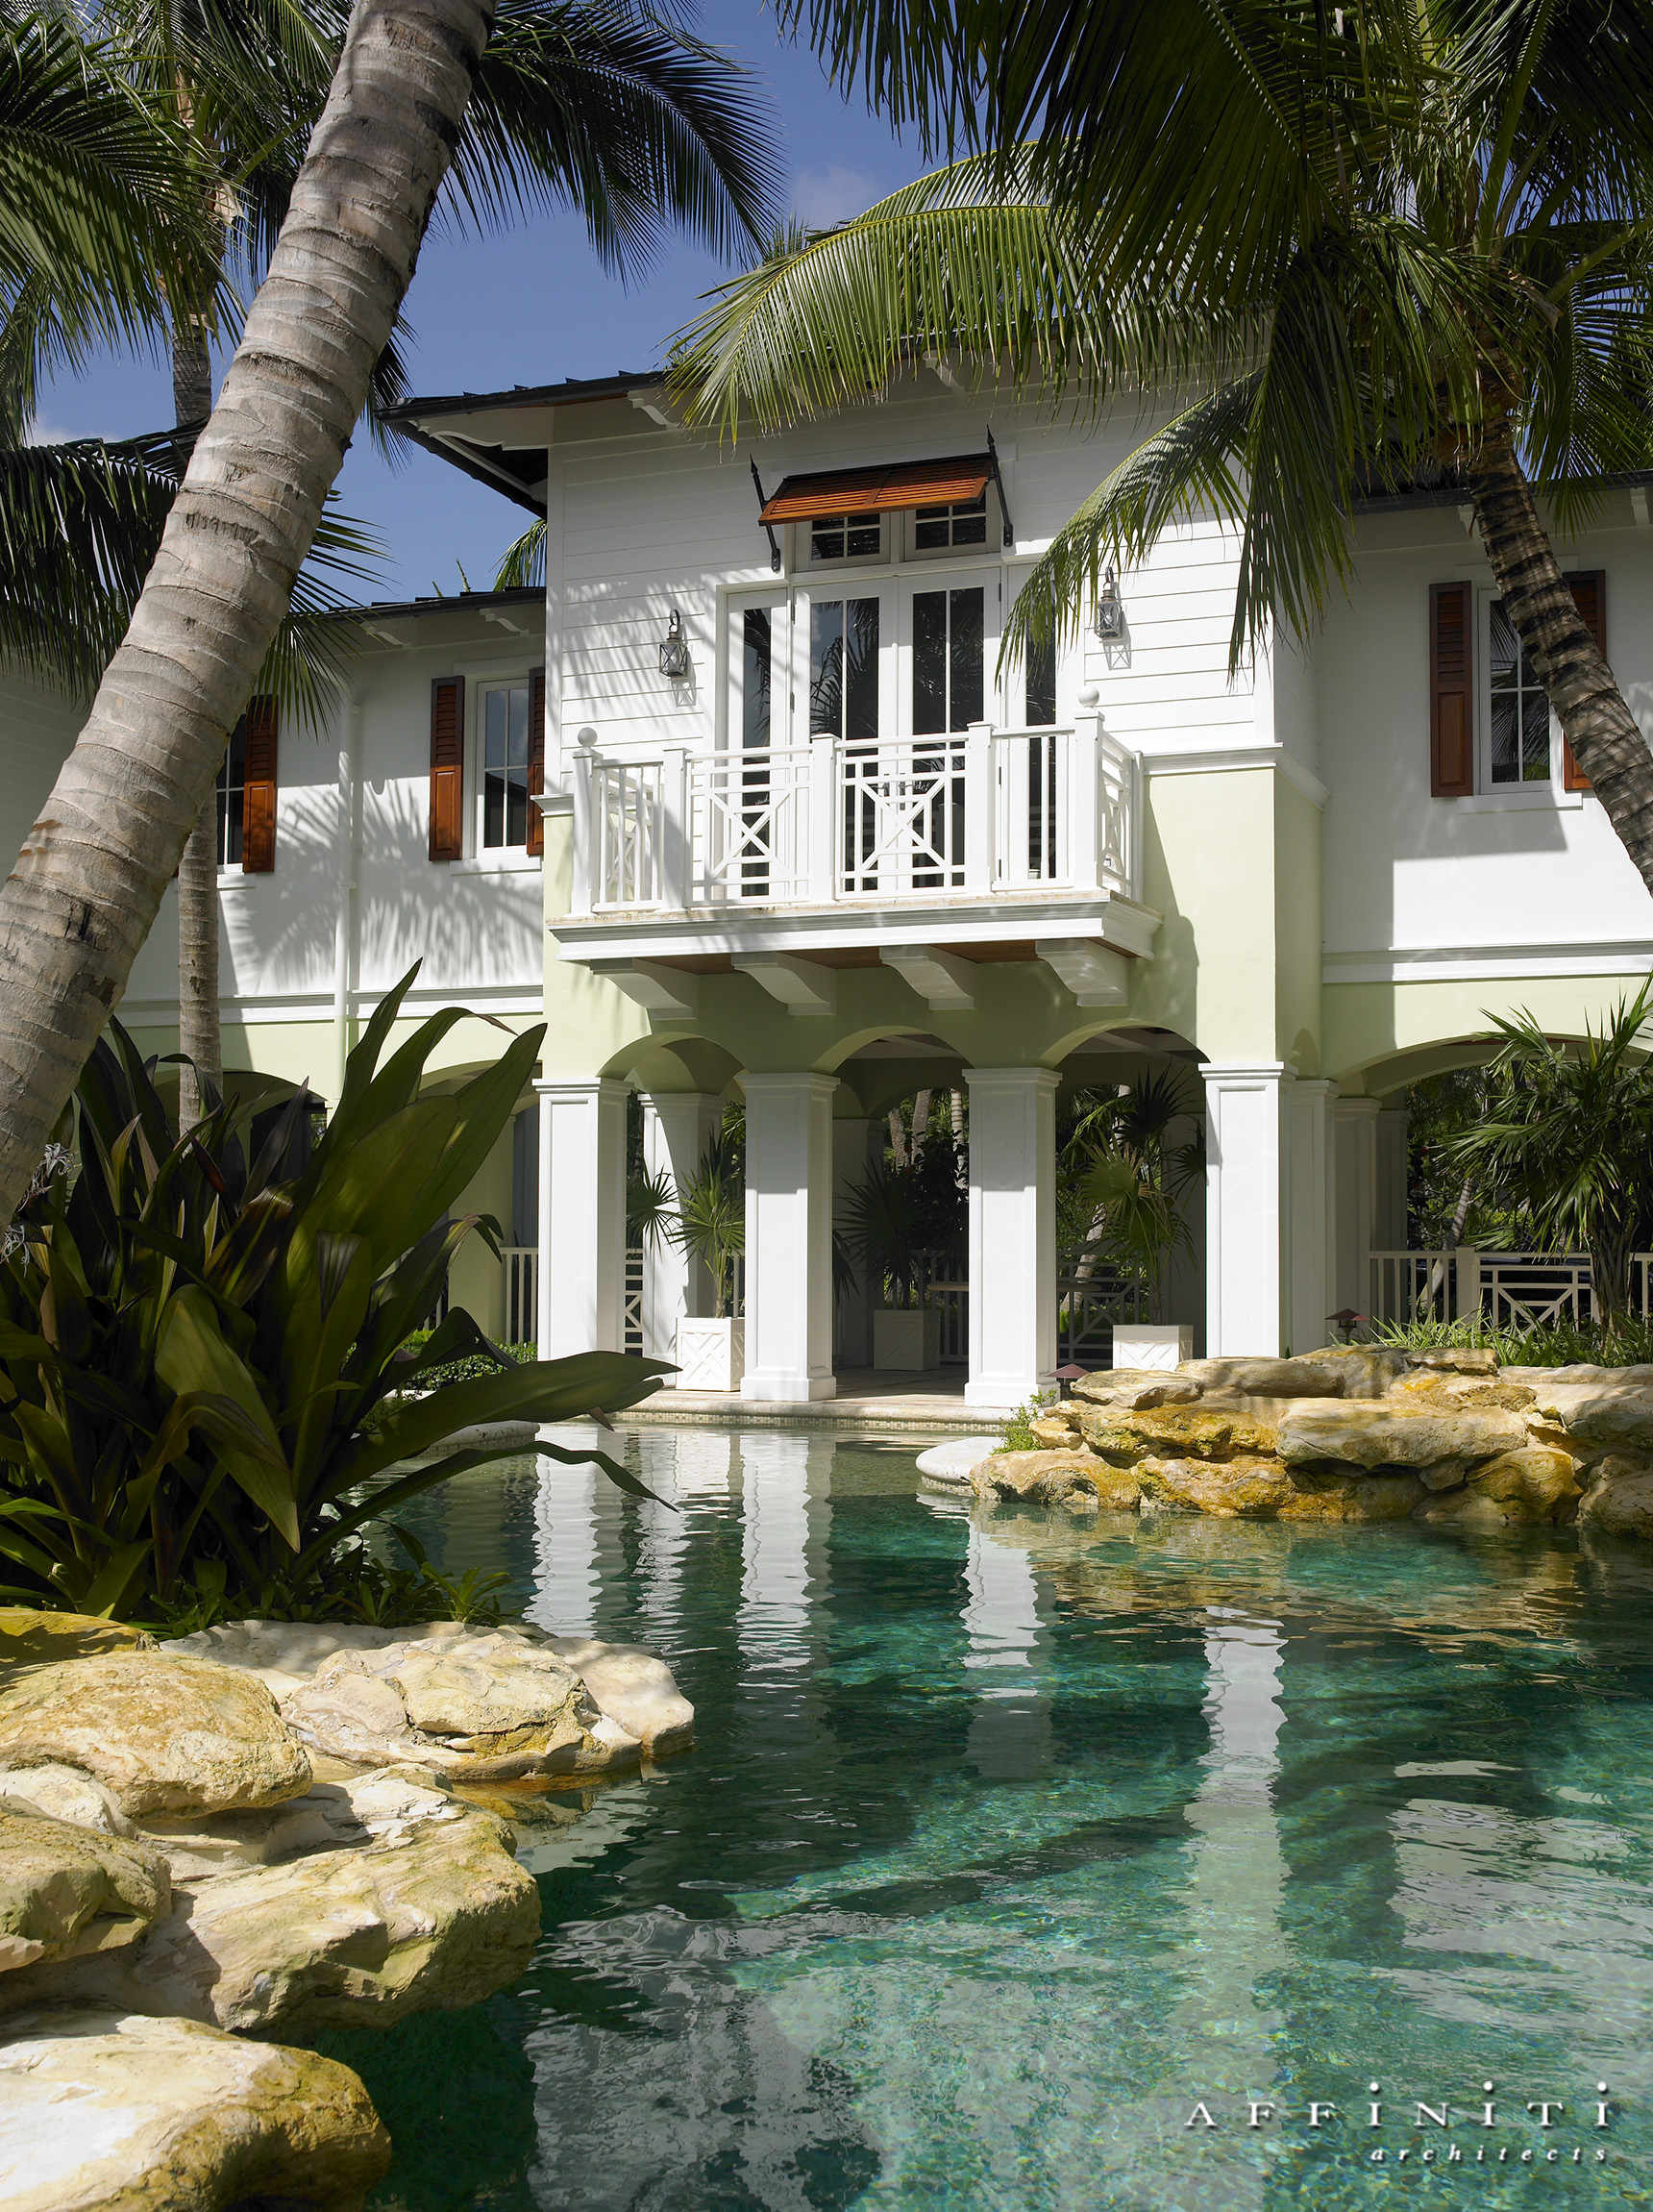 West Indies Estate